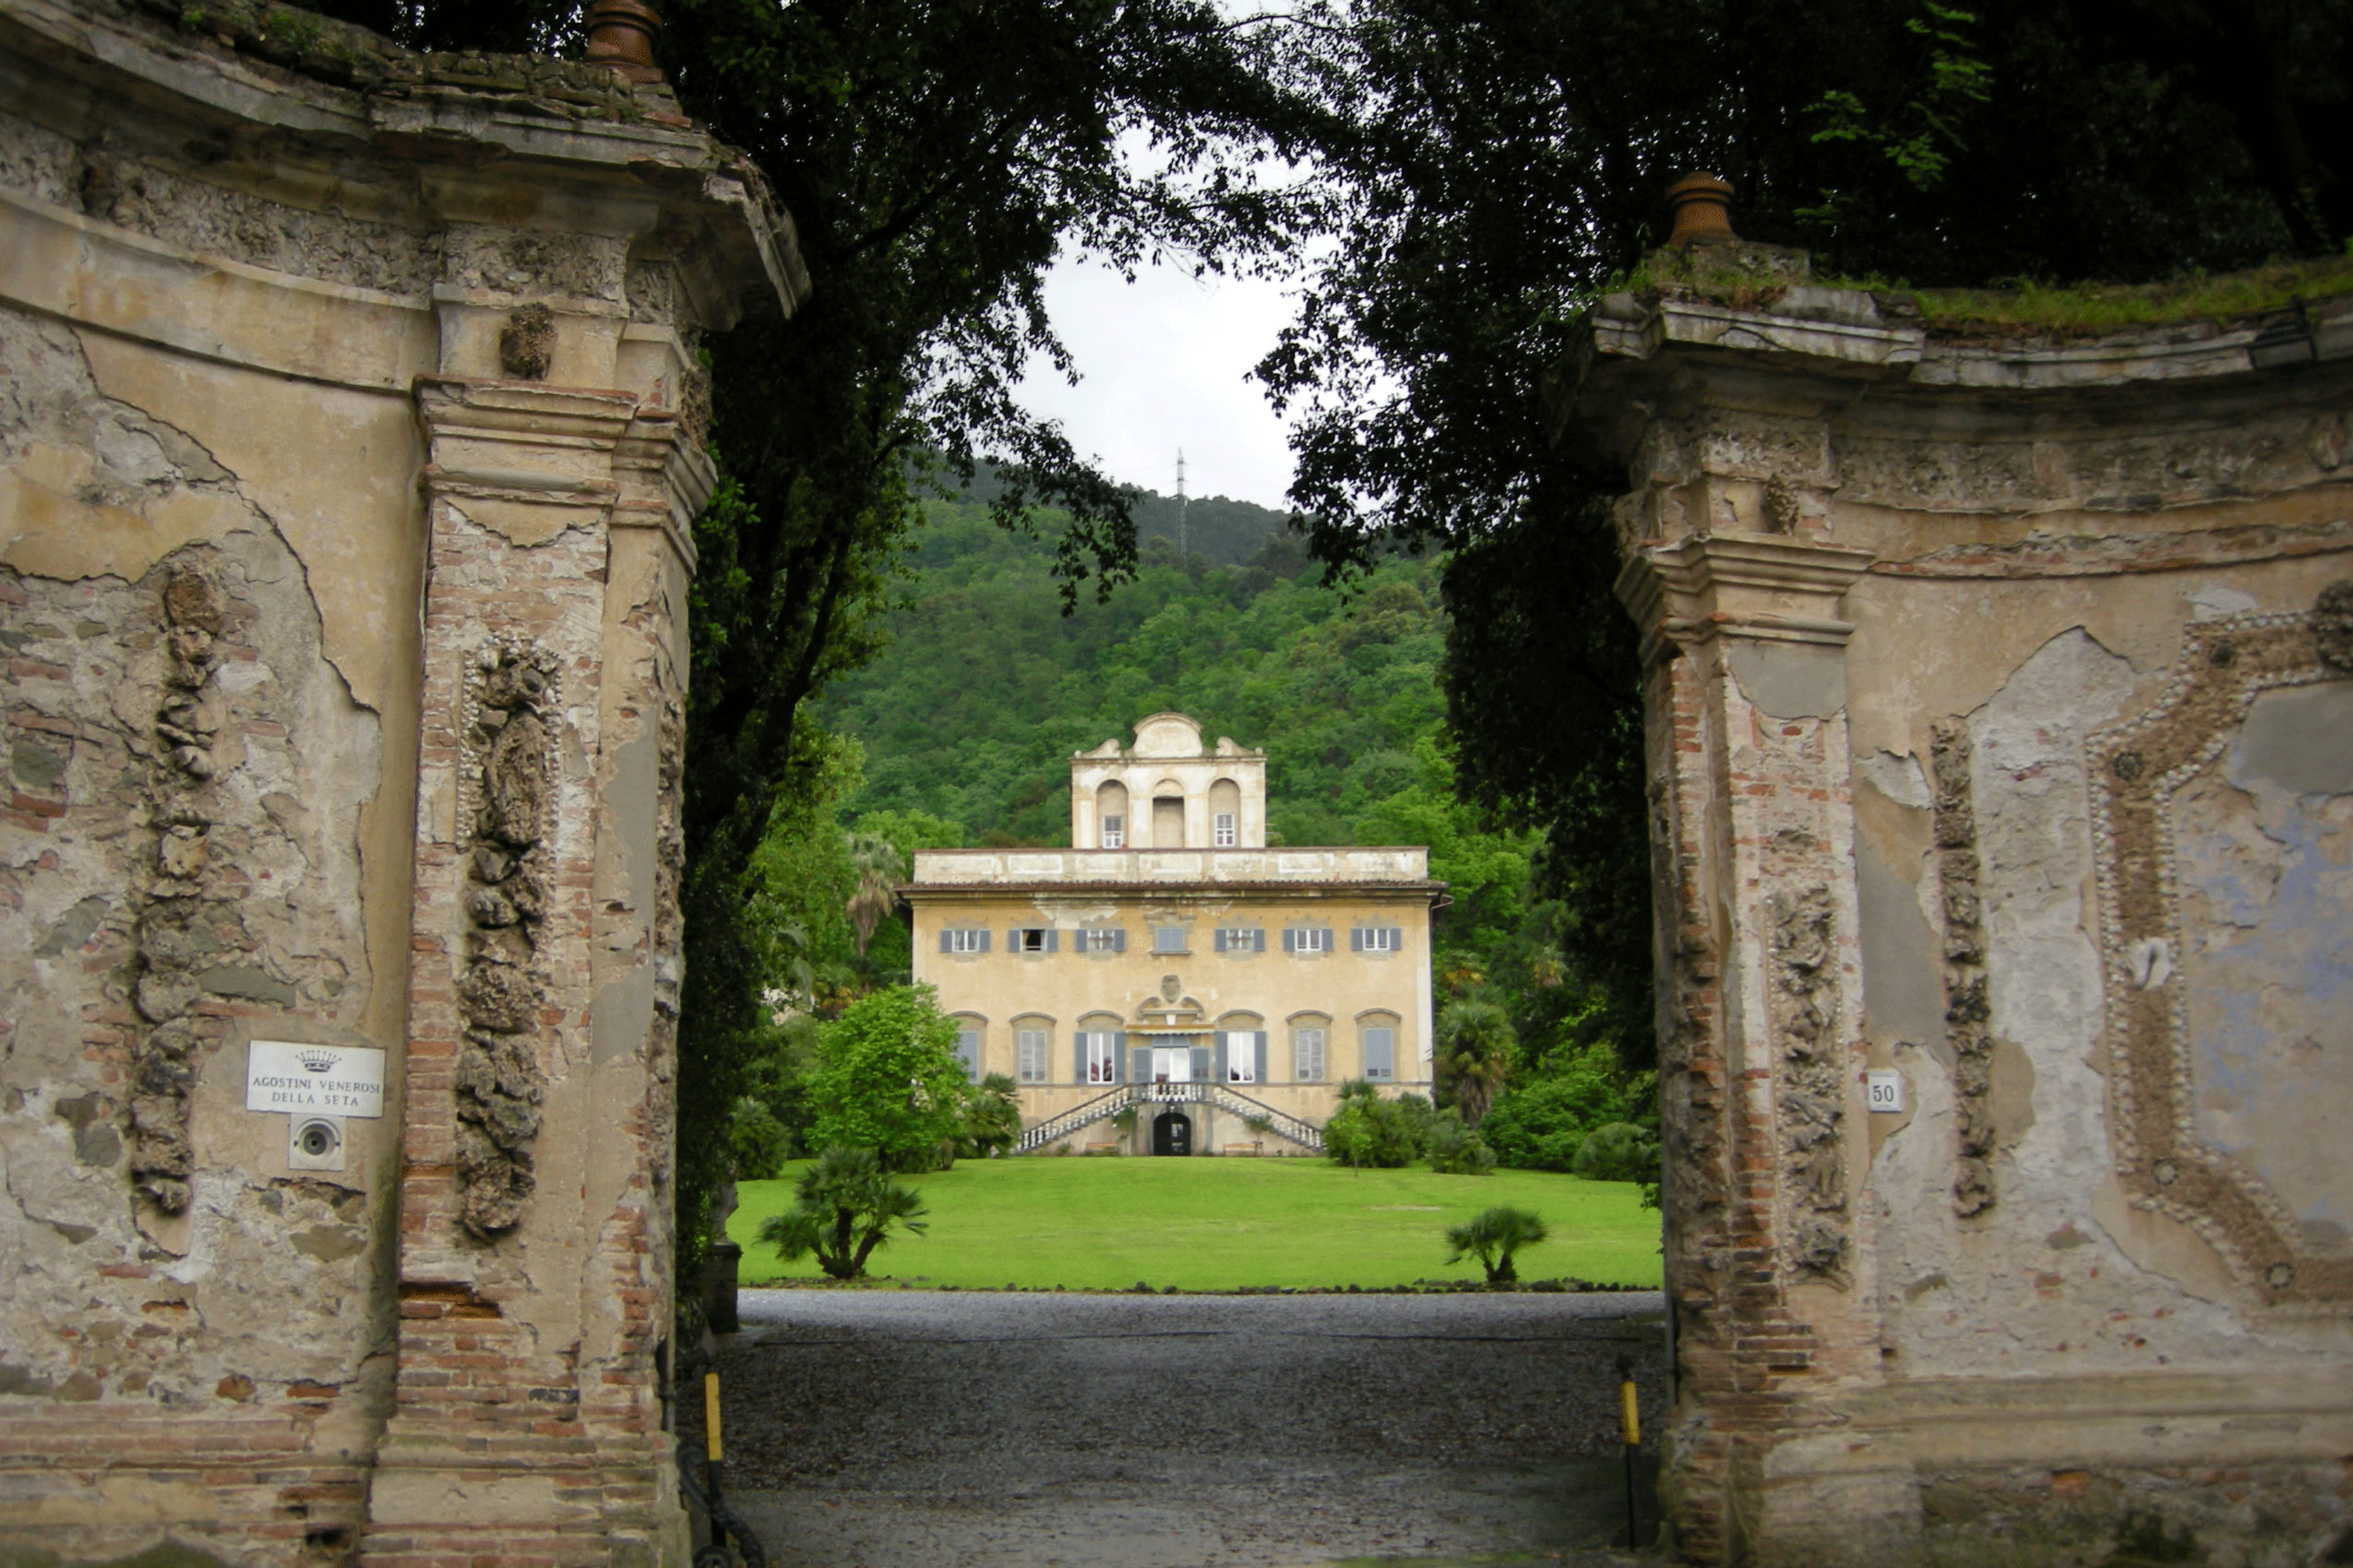 Exterior of the Villa di Corliano as seen through a gate in a large stone wall